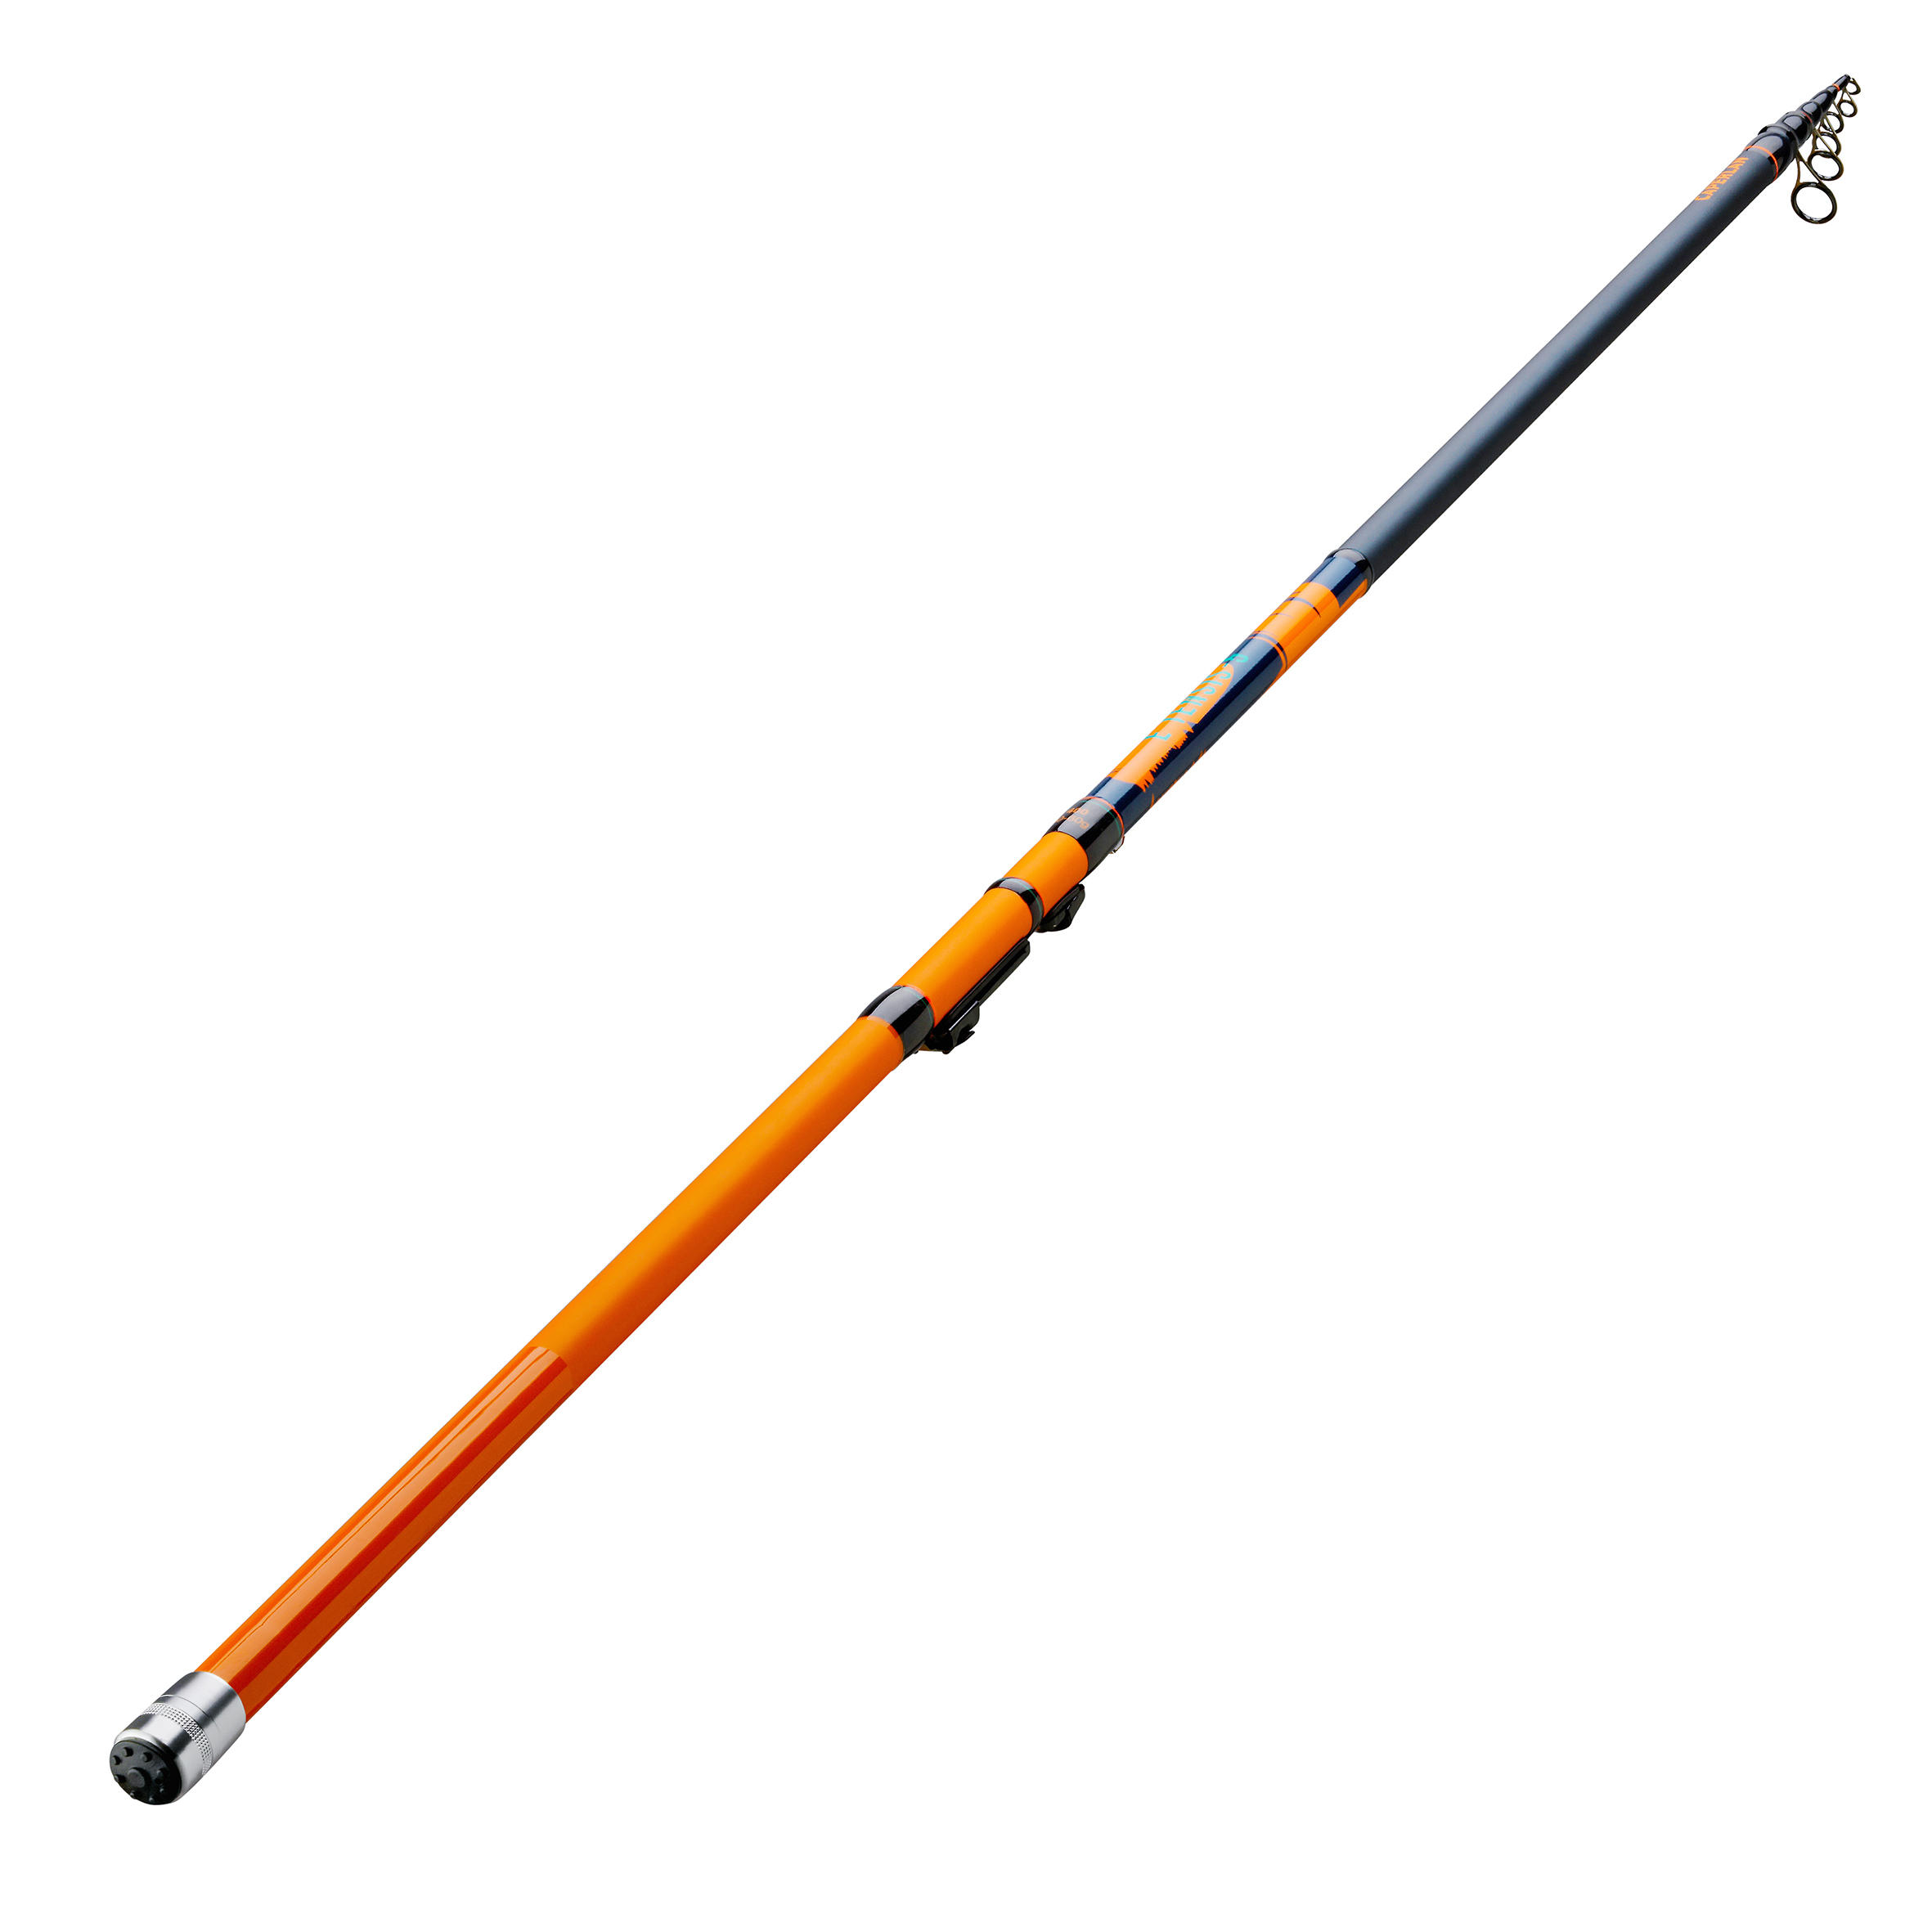 E'TENSIS-5 400 sea fishing rod 1/8